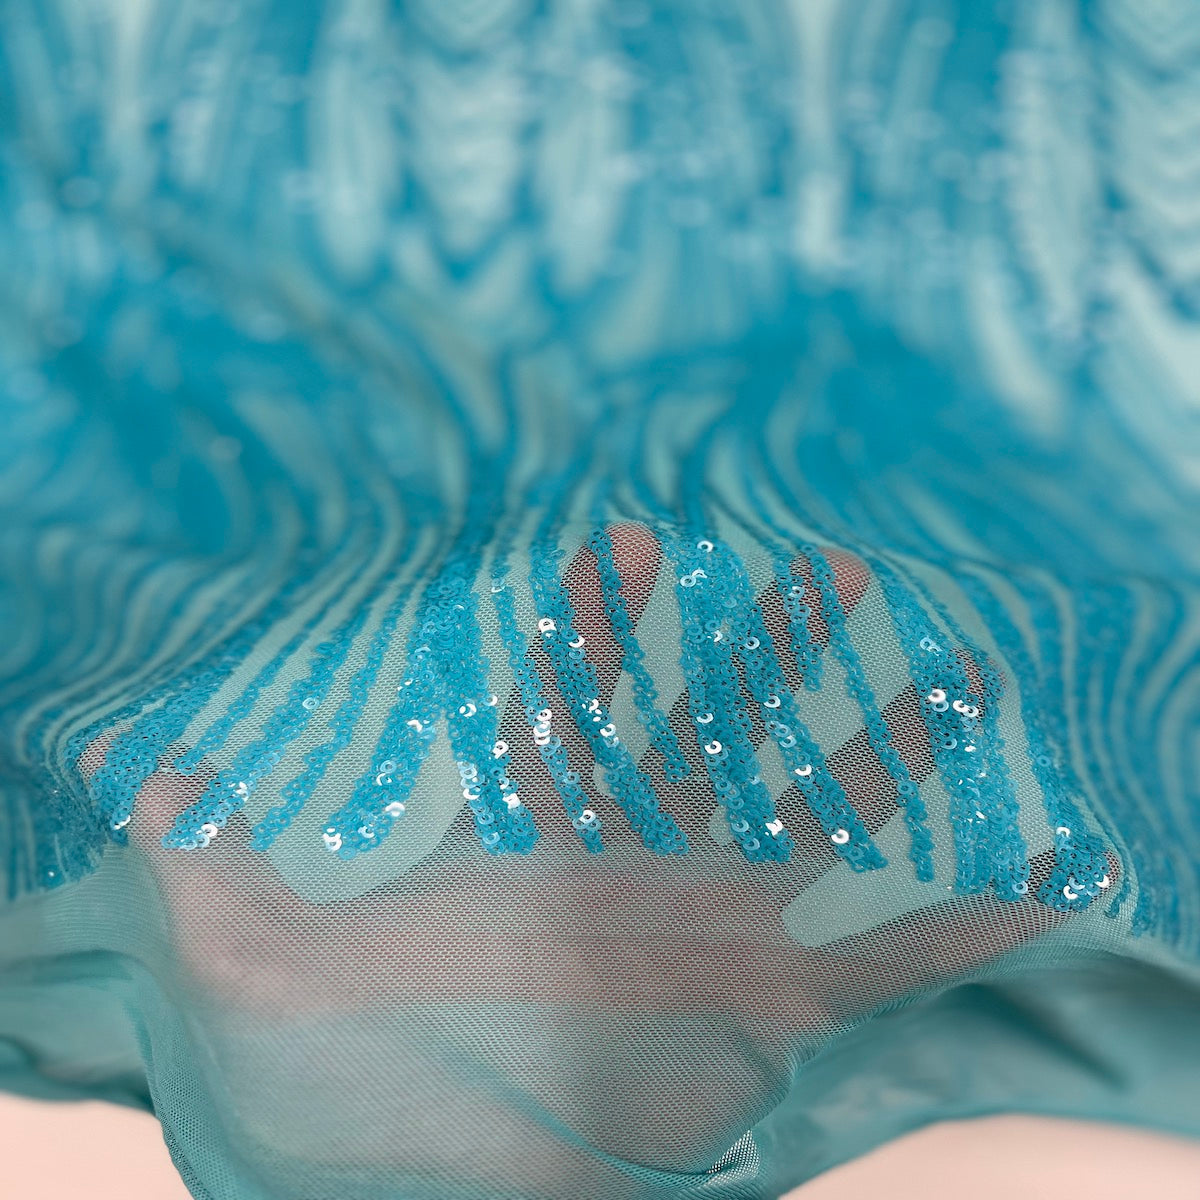 Tela de encaje de lentejuelas elásticas Selena Wave azul aguamarina 